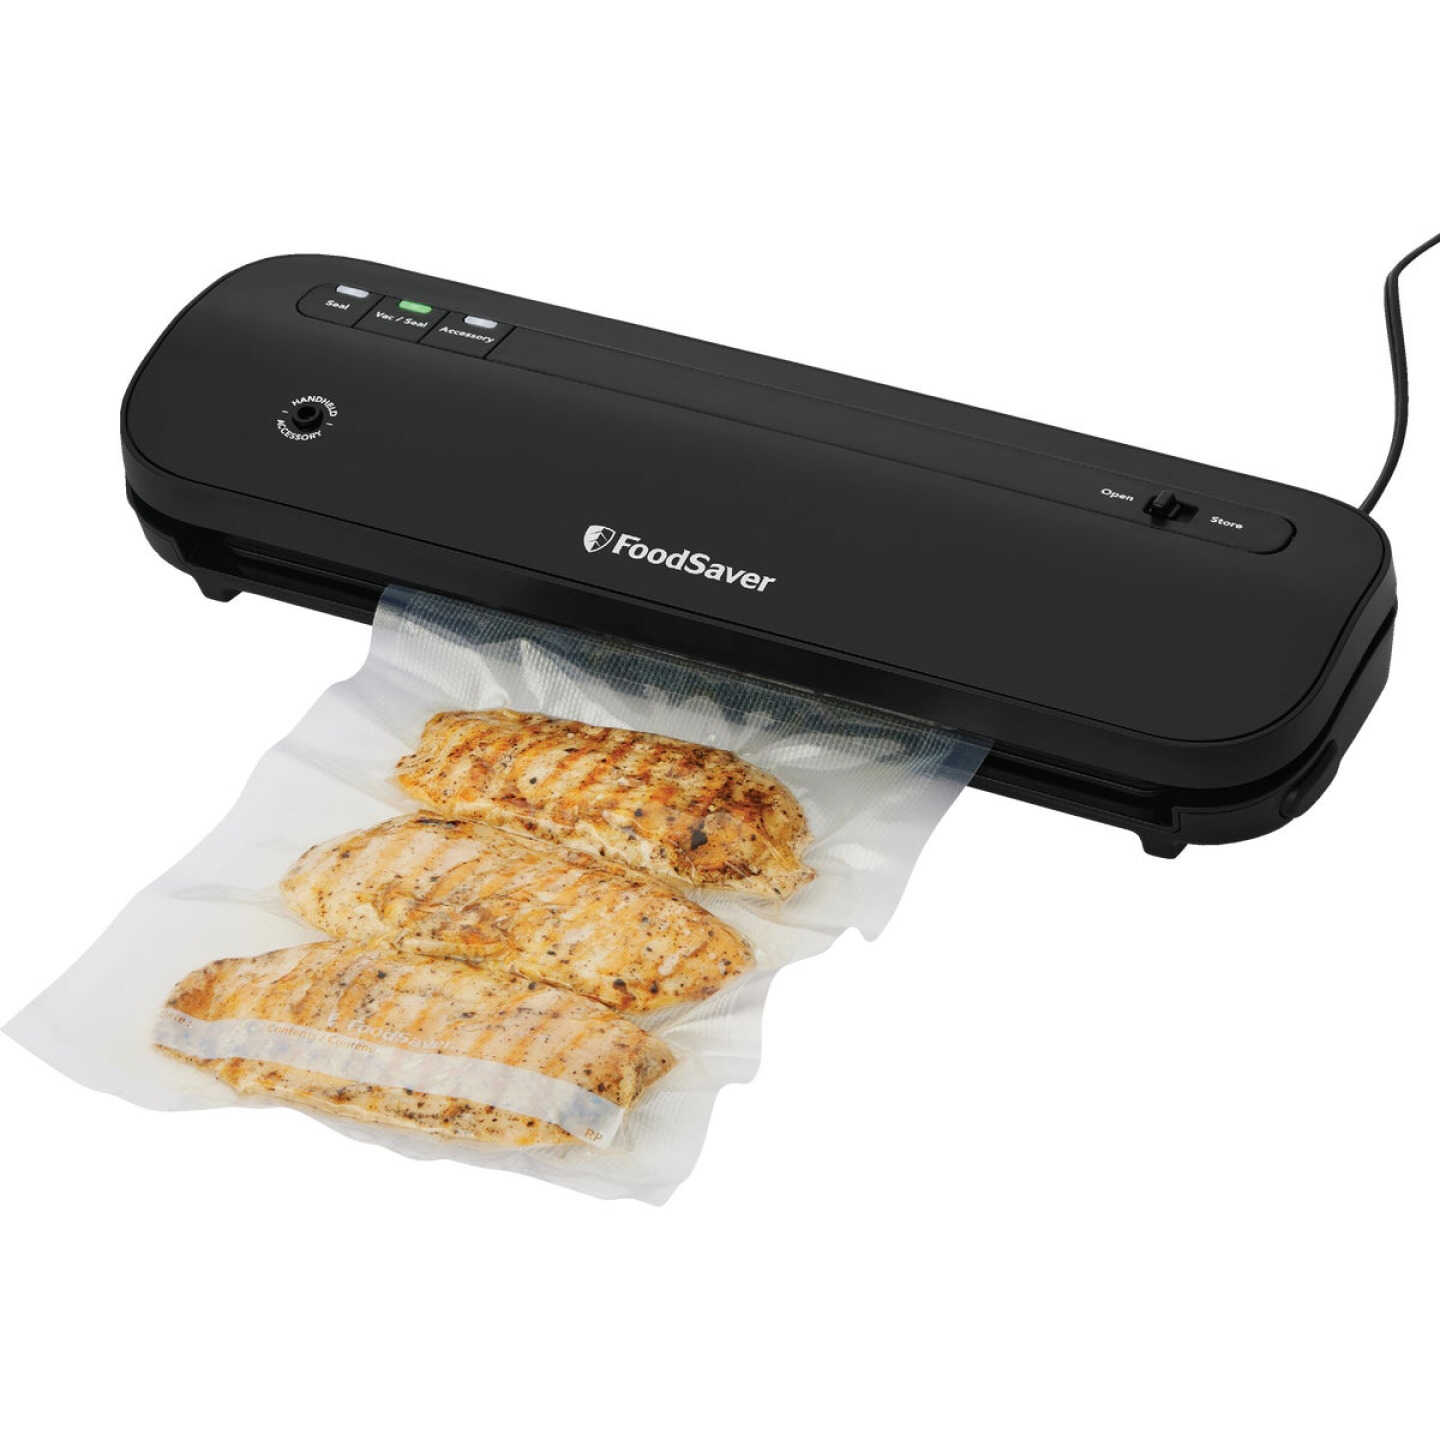 FoodSaver Make Your Own Vacuum Sealer Bags (5-Pack) - Gillman Home Center